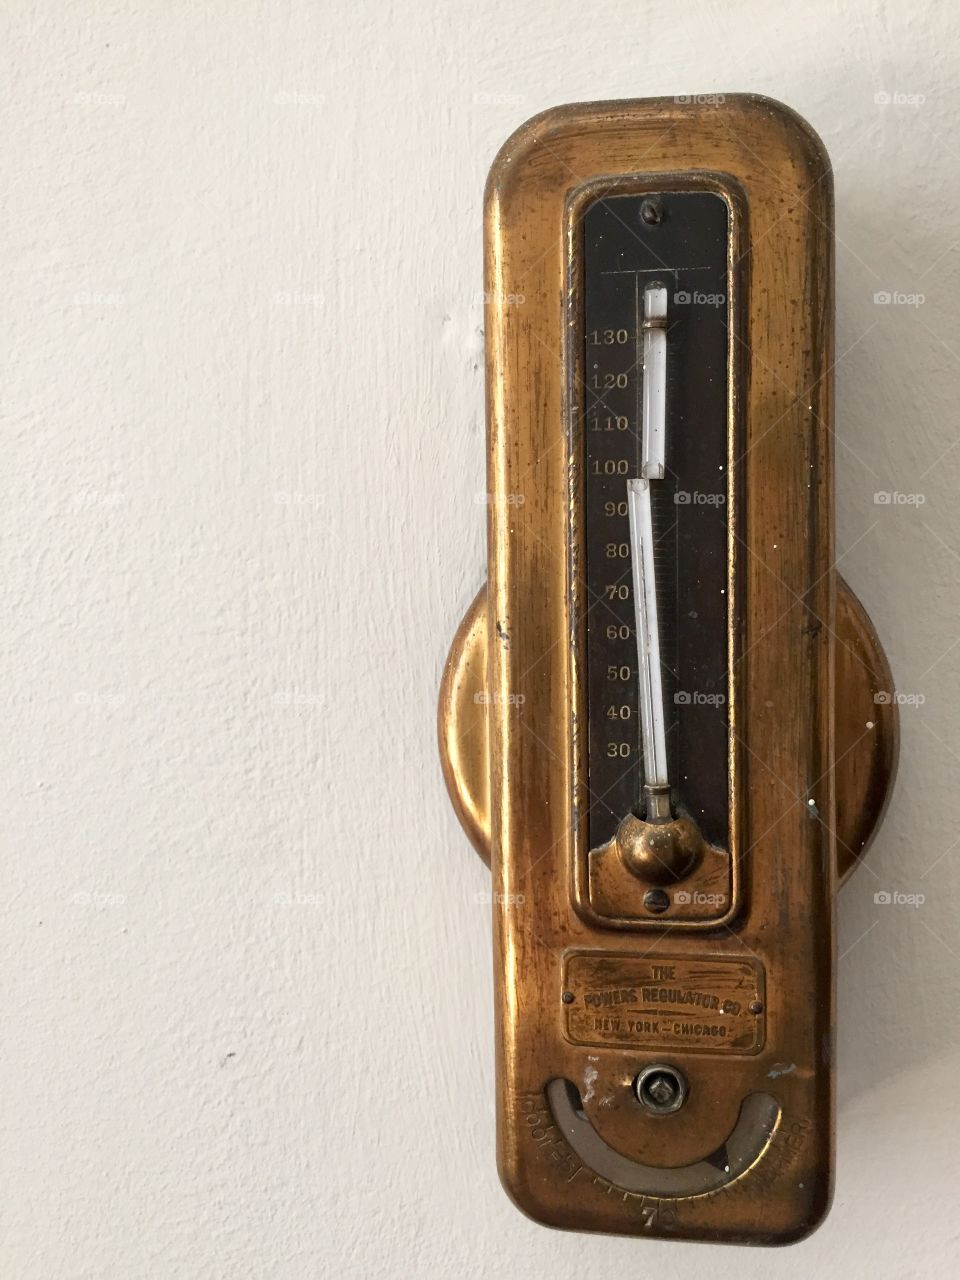 Broken thermostat
Thermostat brisé